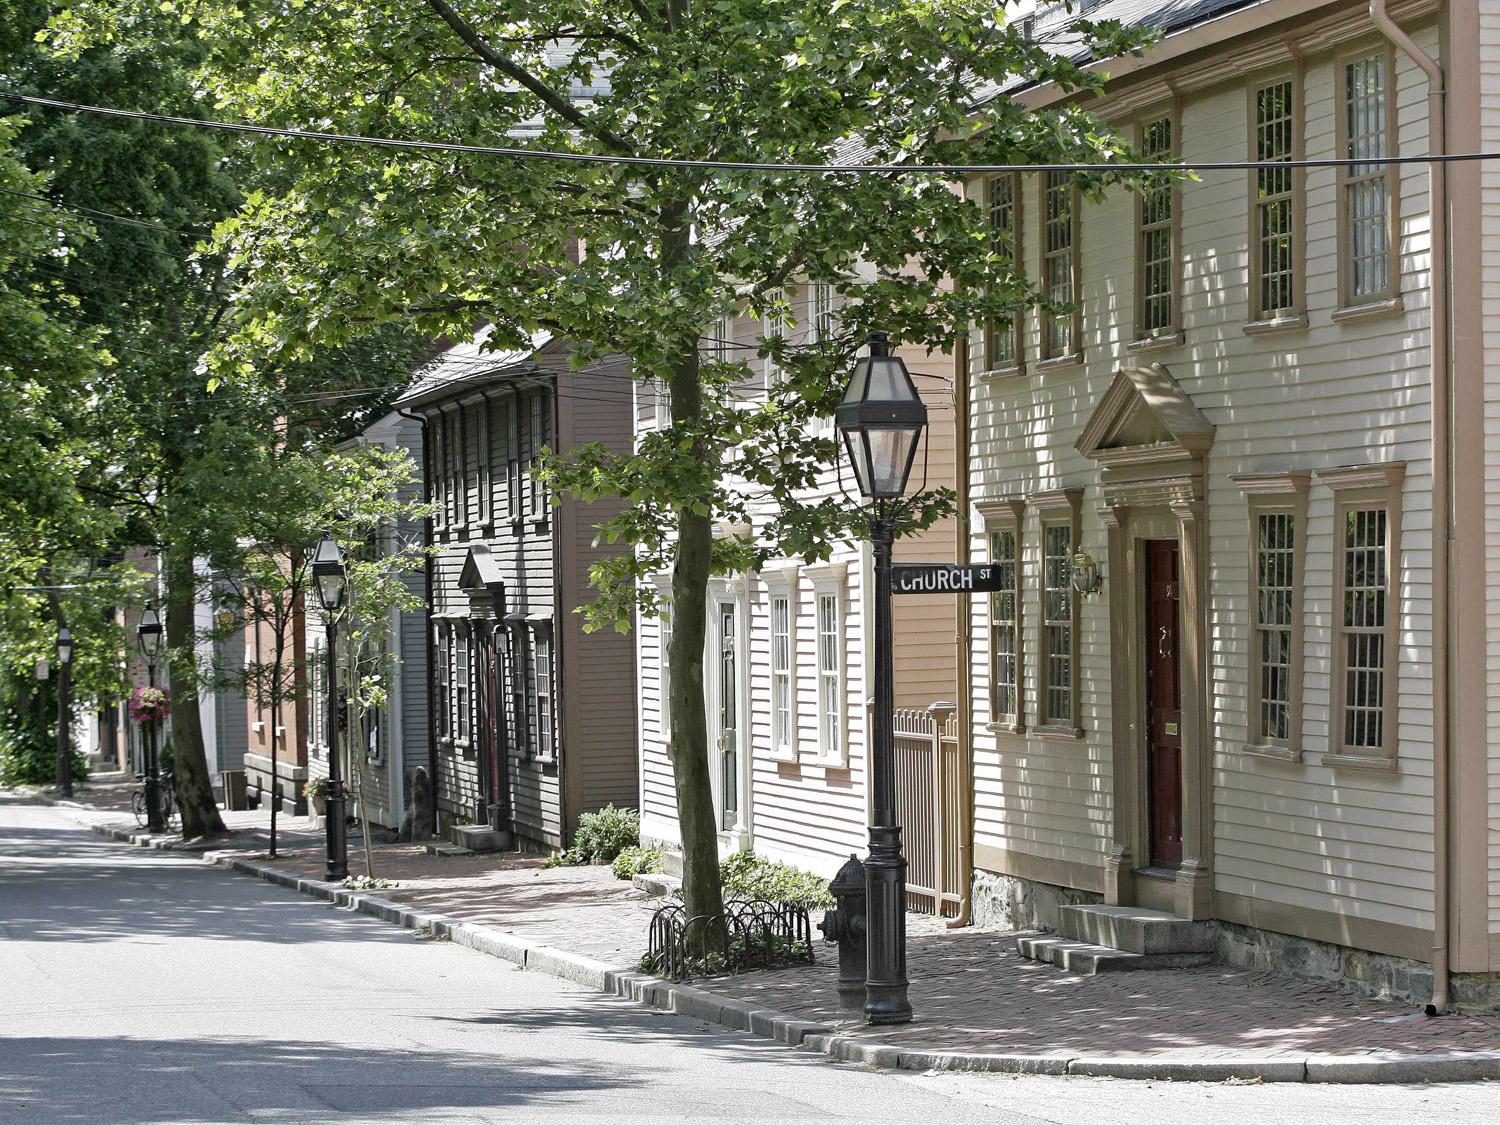 Calles de la ciudad de Provindence, capital de Rhode Island